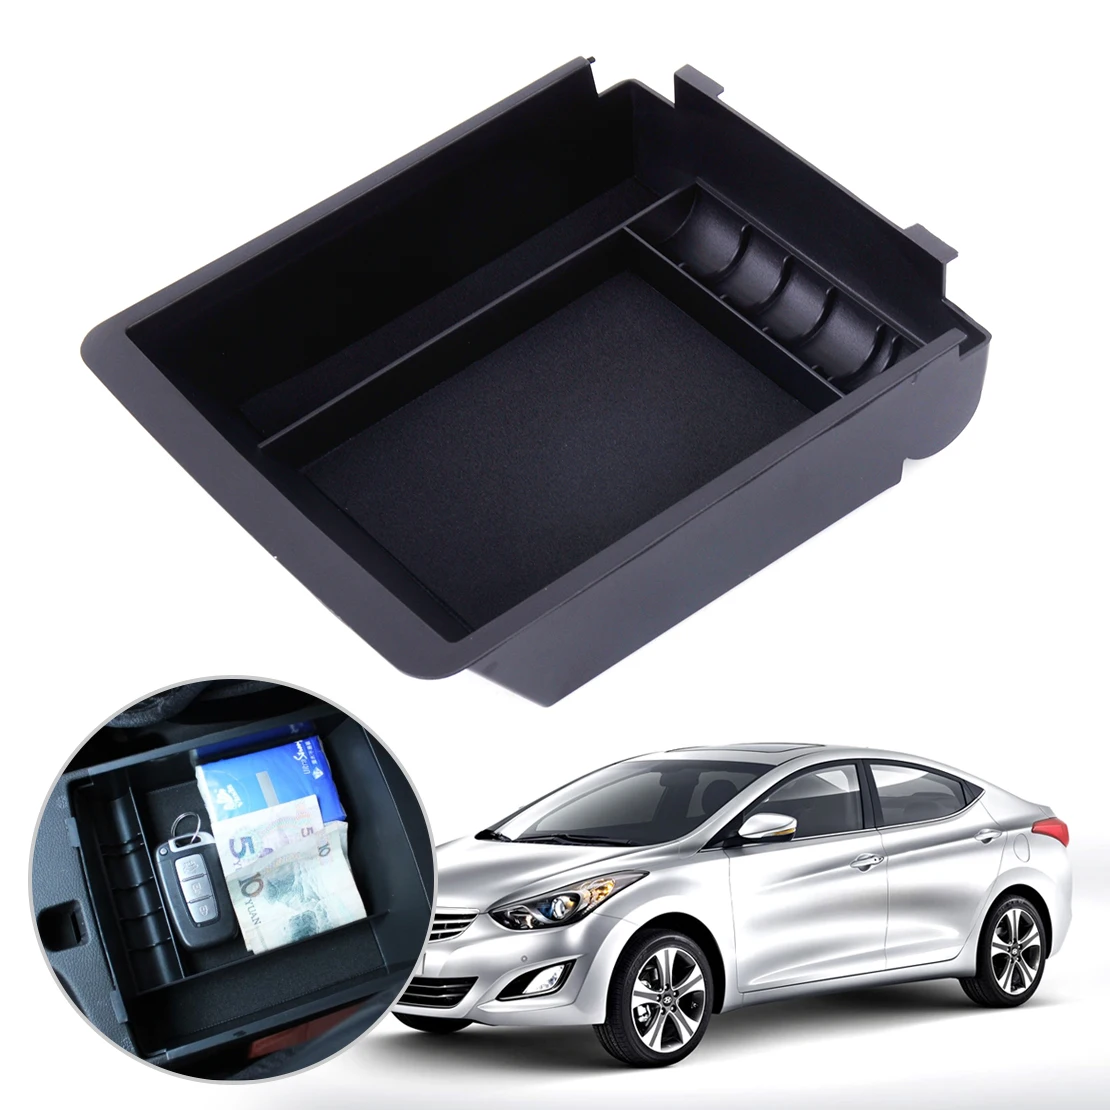 CDEFG for Korando 2019 2020 Car Central Armrest Storage Box Container Tray Organizer Accessories with Anti-slip mat 